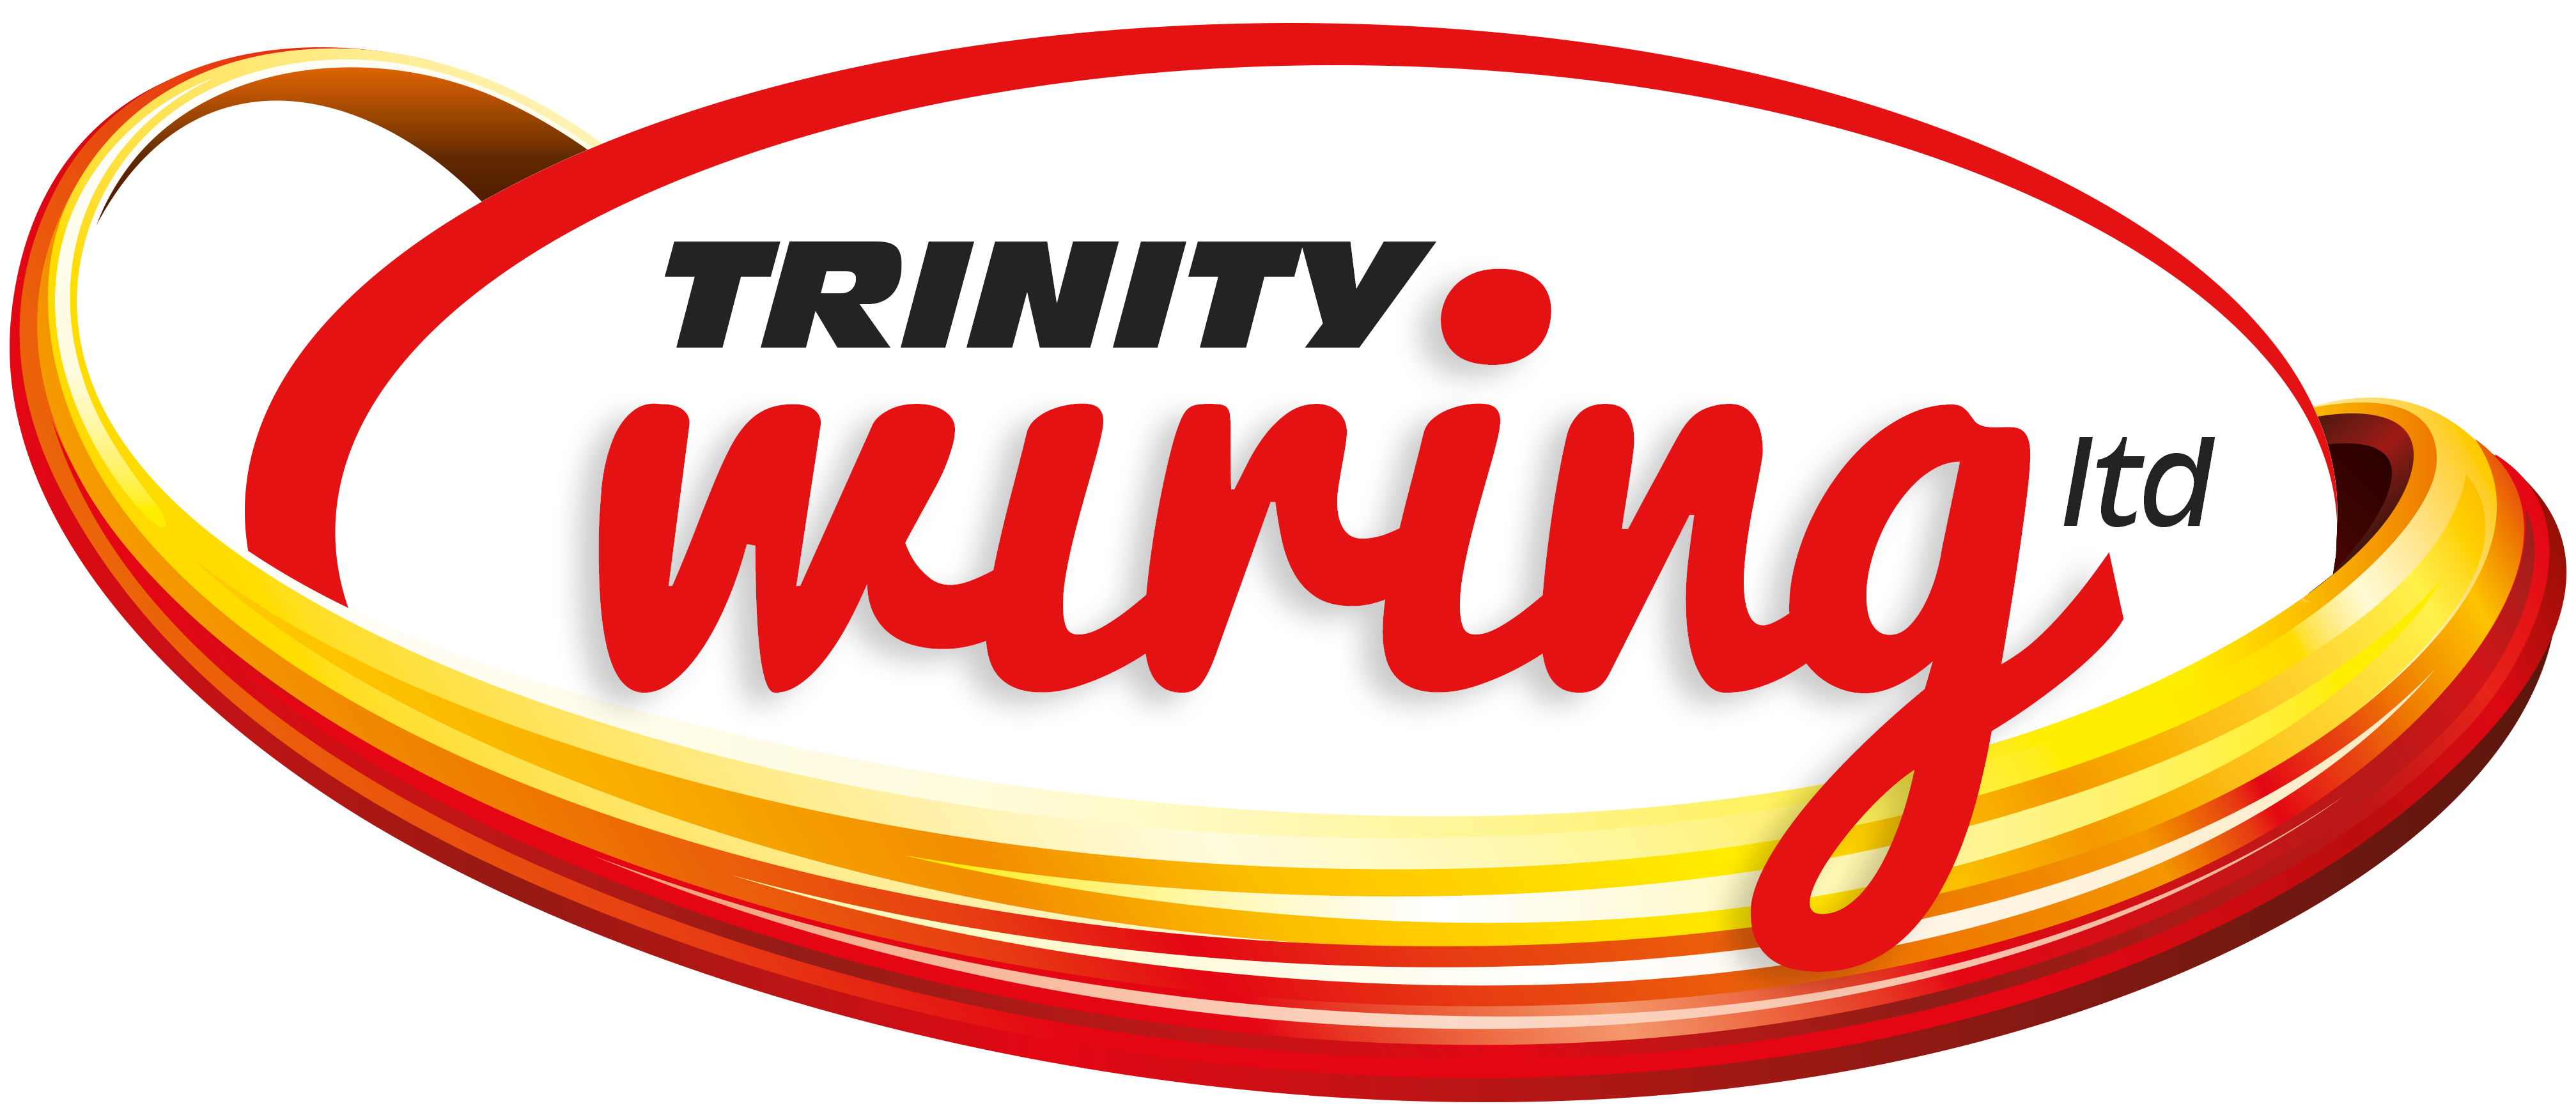 Trinity Wiring Ltd